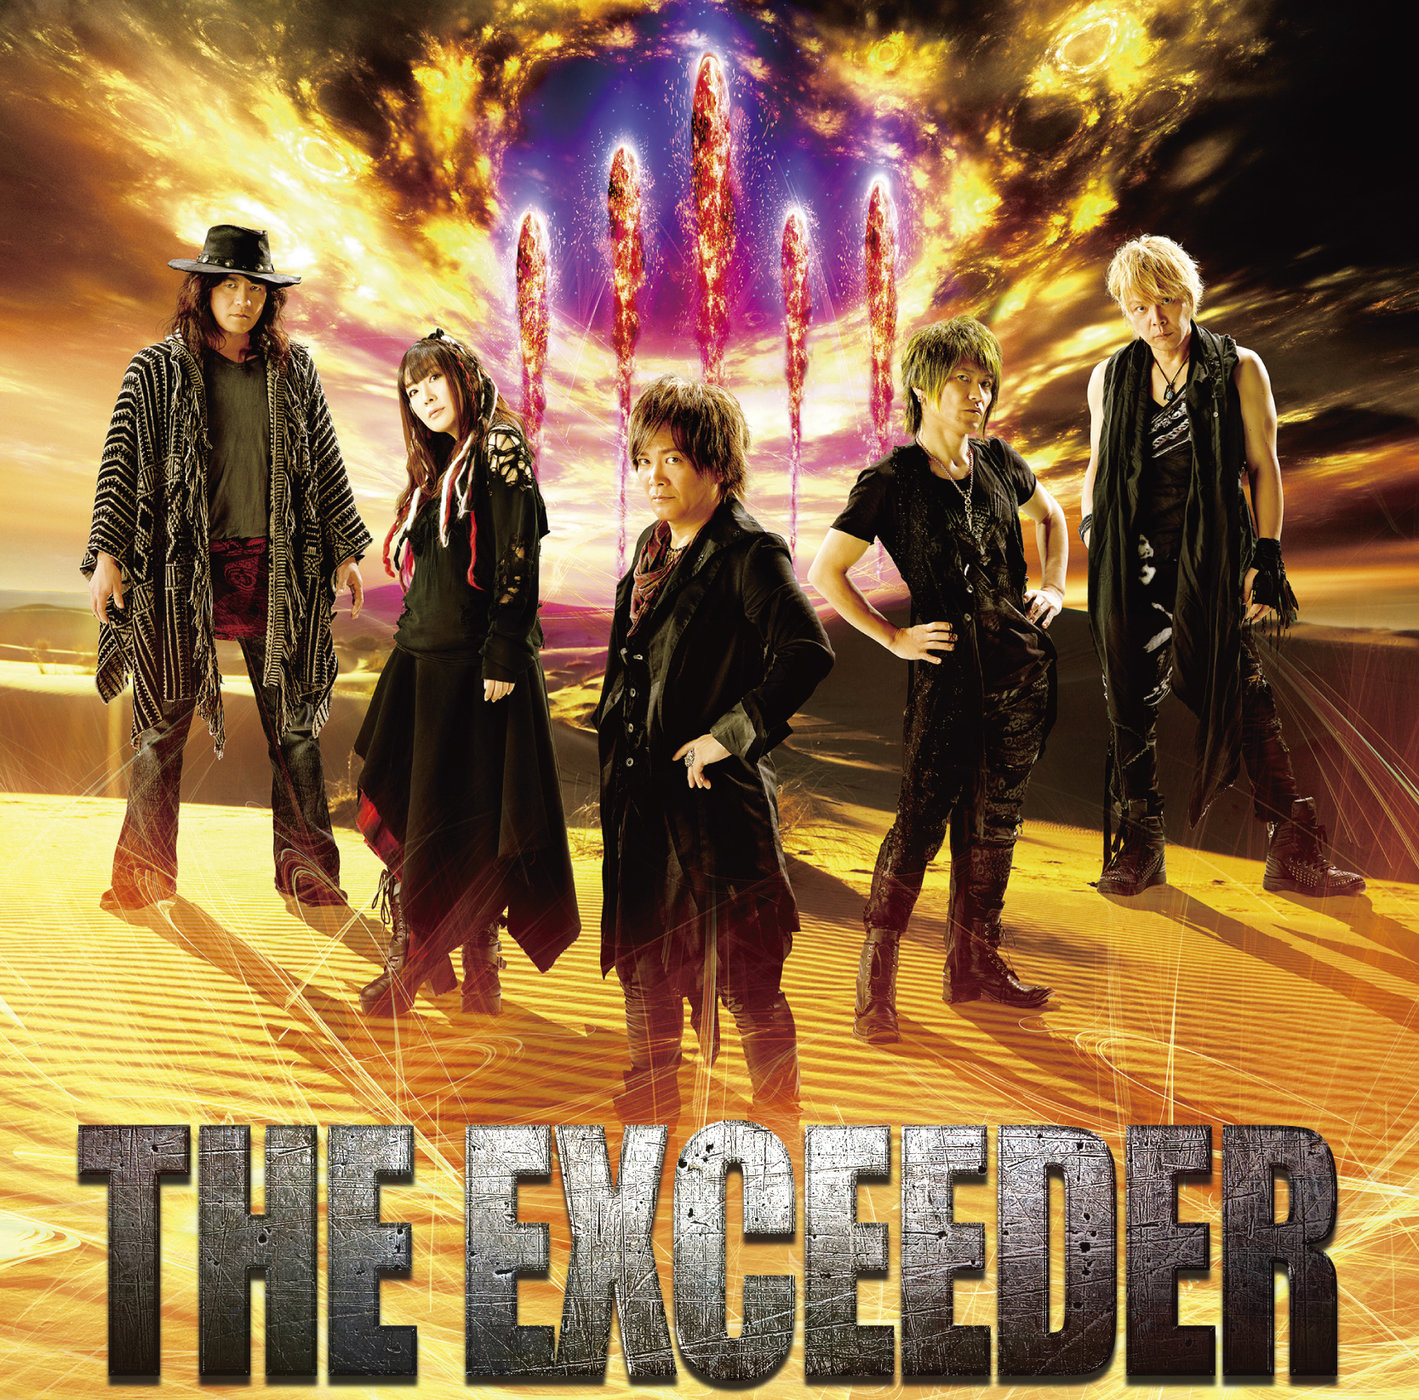 The exceeder